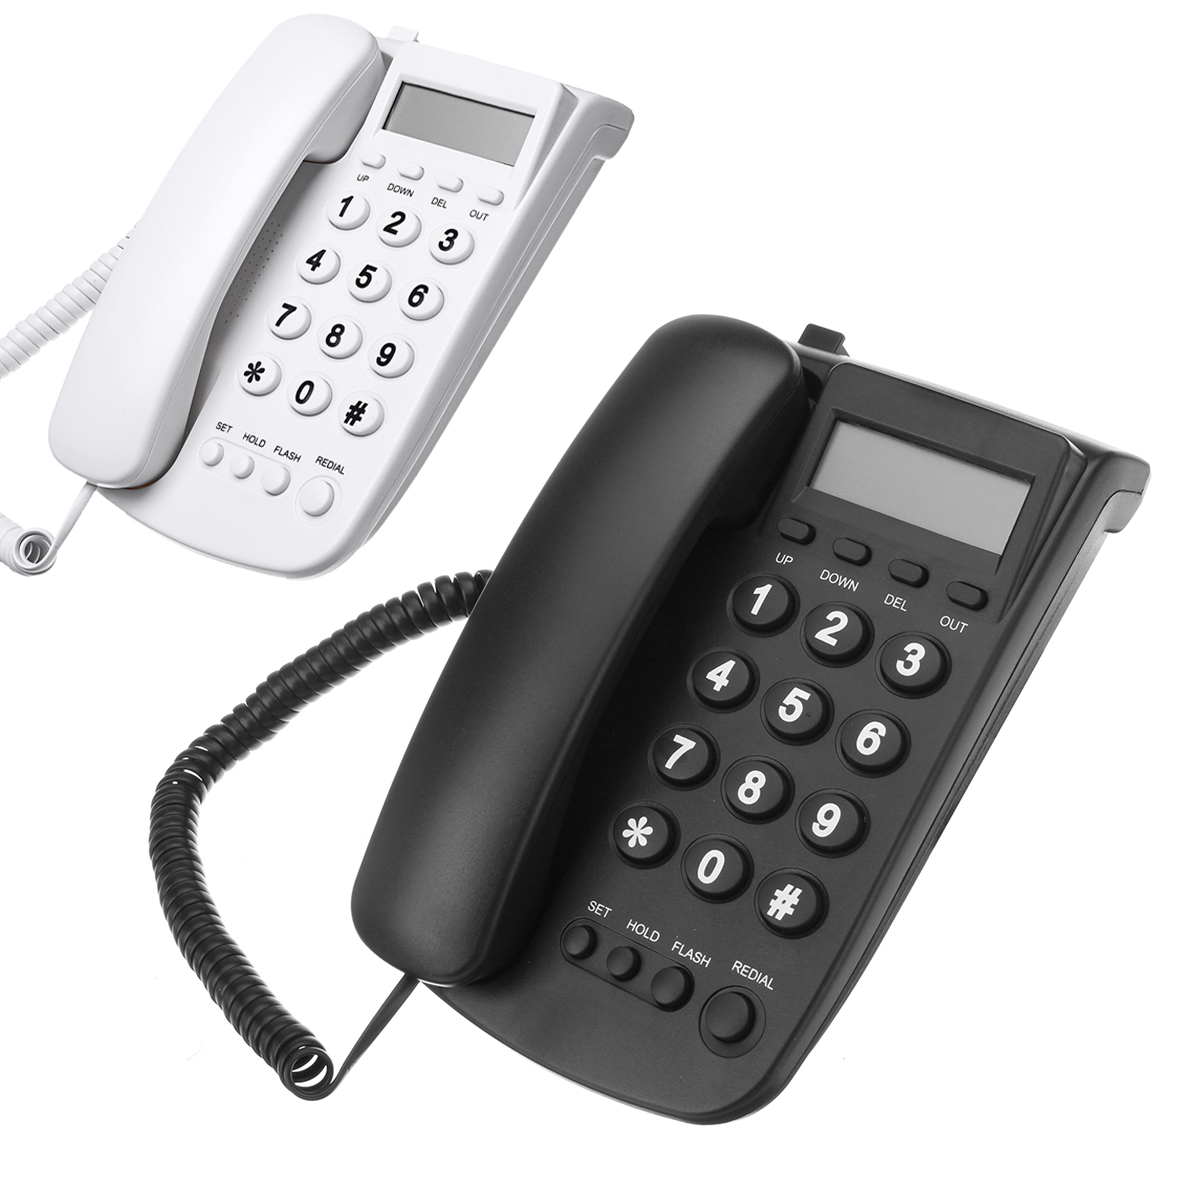 

NINC B24885 Hotel Telephone Home Hotel Wired Desktop Wall Phone Office Landline Telephone